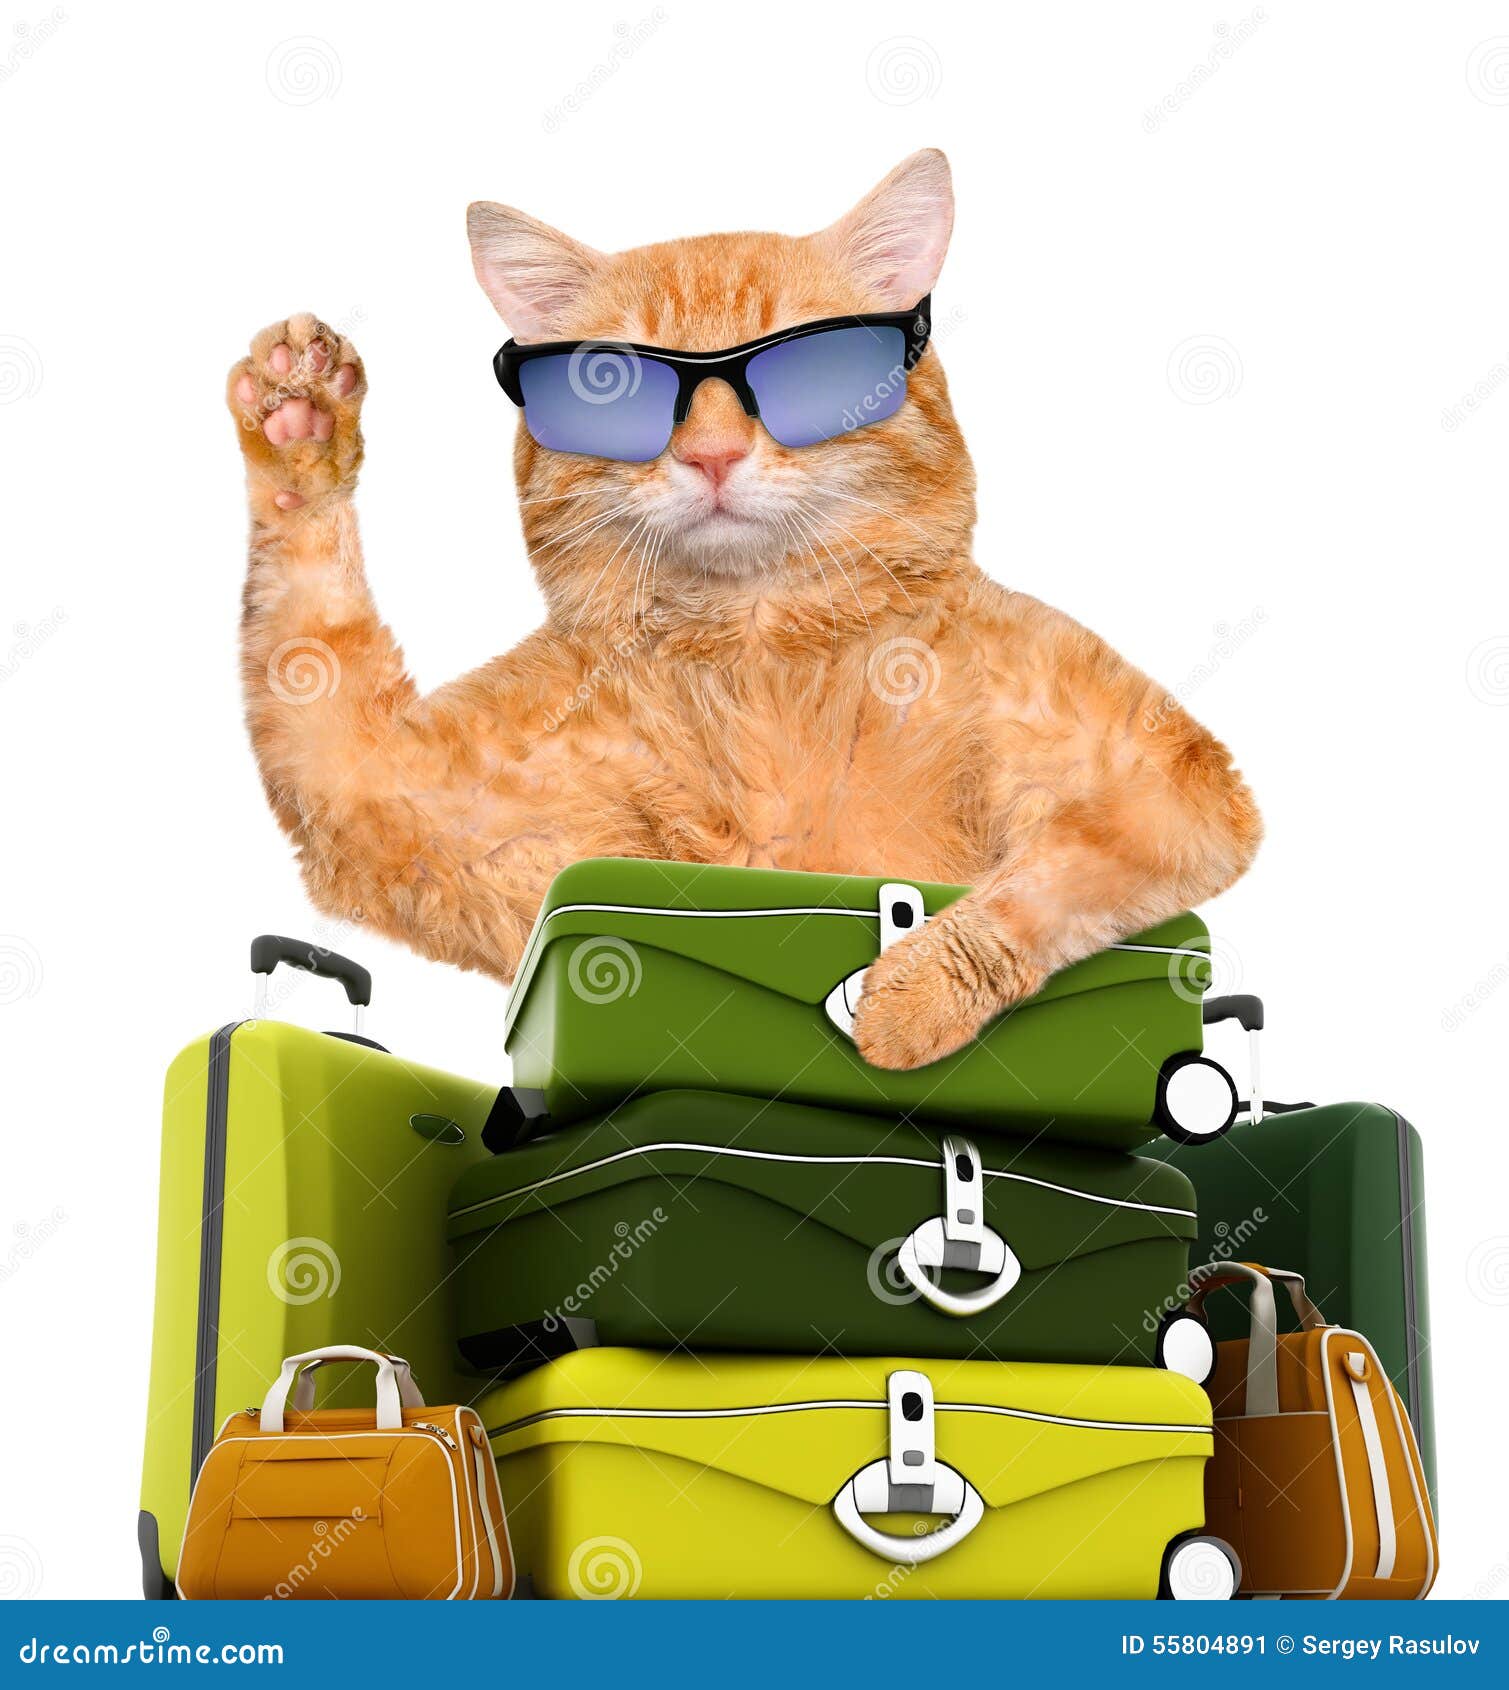 traveller cat